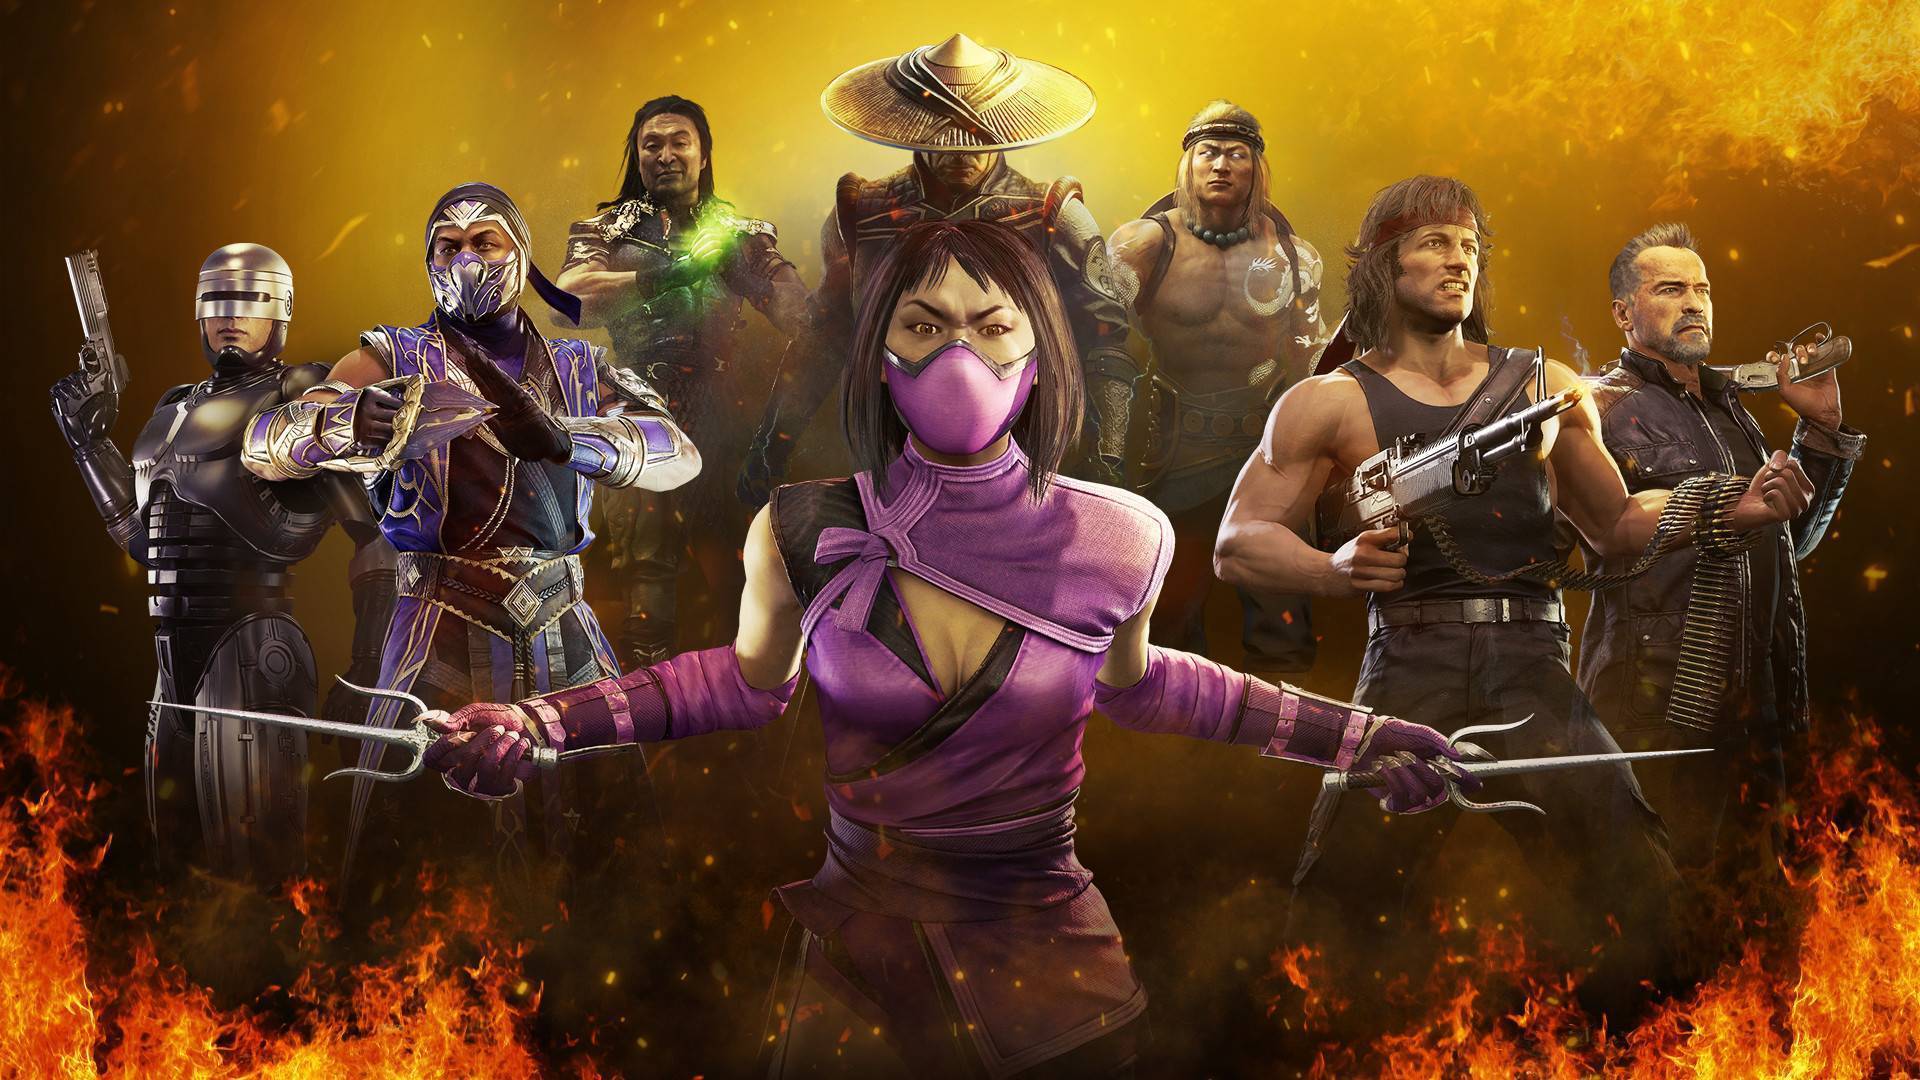 Mortal Kombat 11 Kombat Pack 2 (PC) Key cheap - Price of $2.80 for Steam